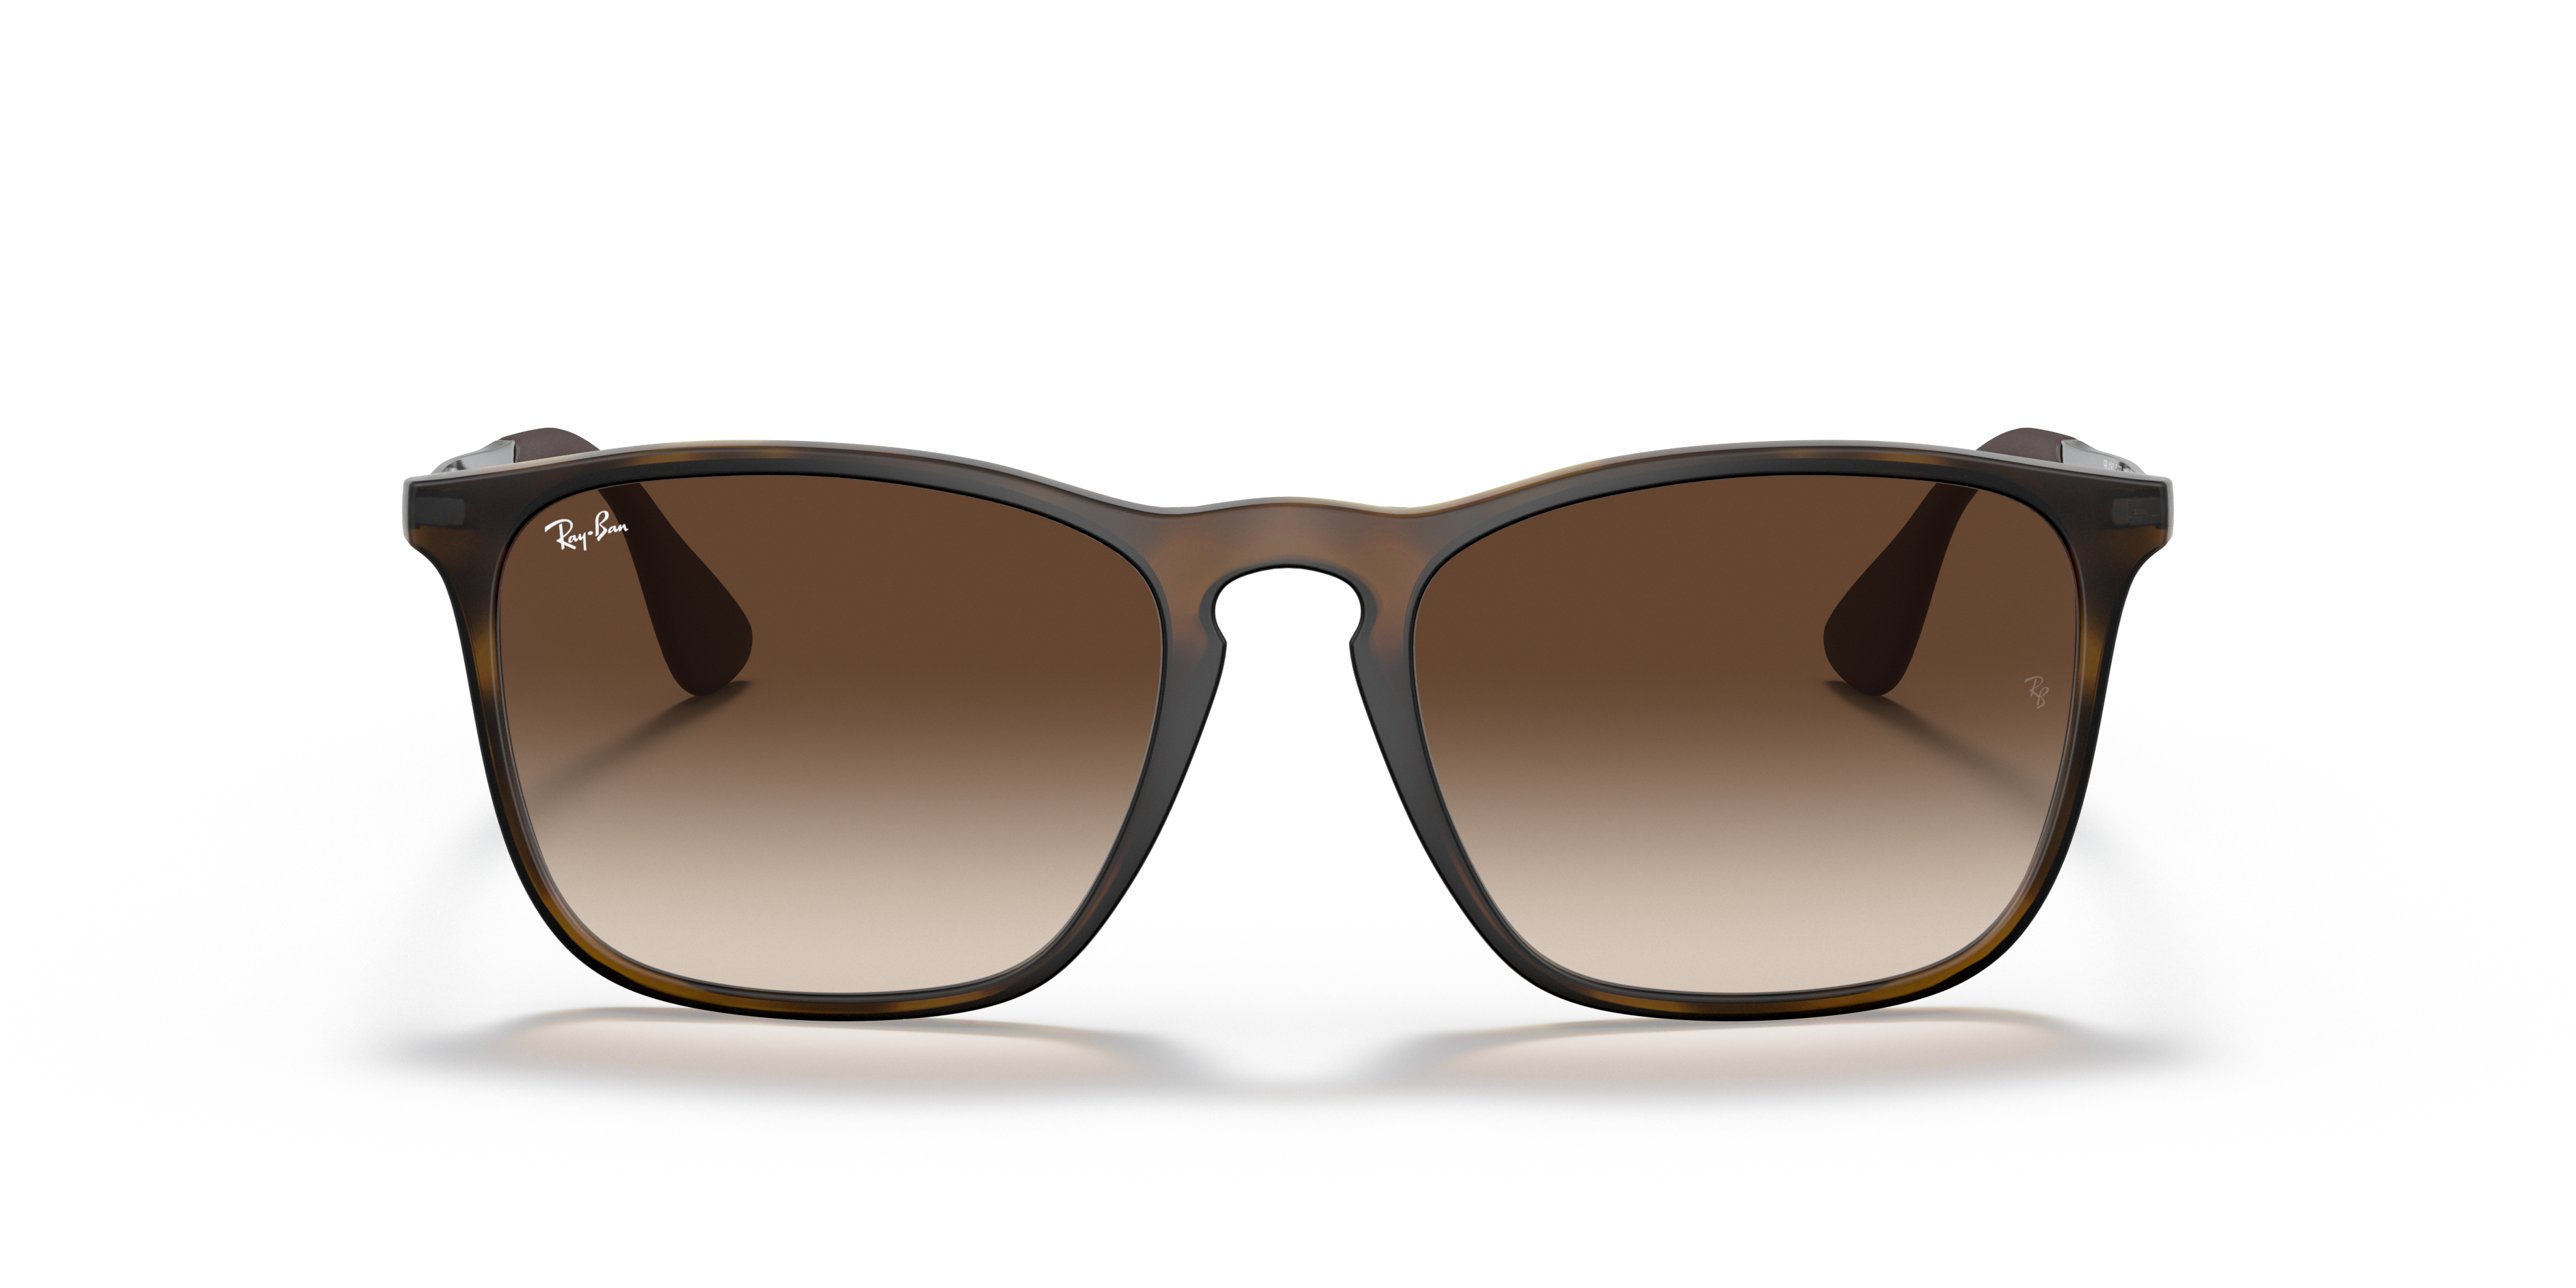 Chris Sunglasses in Havana and Brown | Ray-Ban®